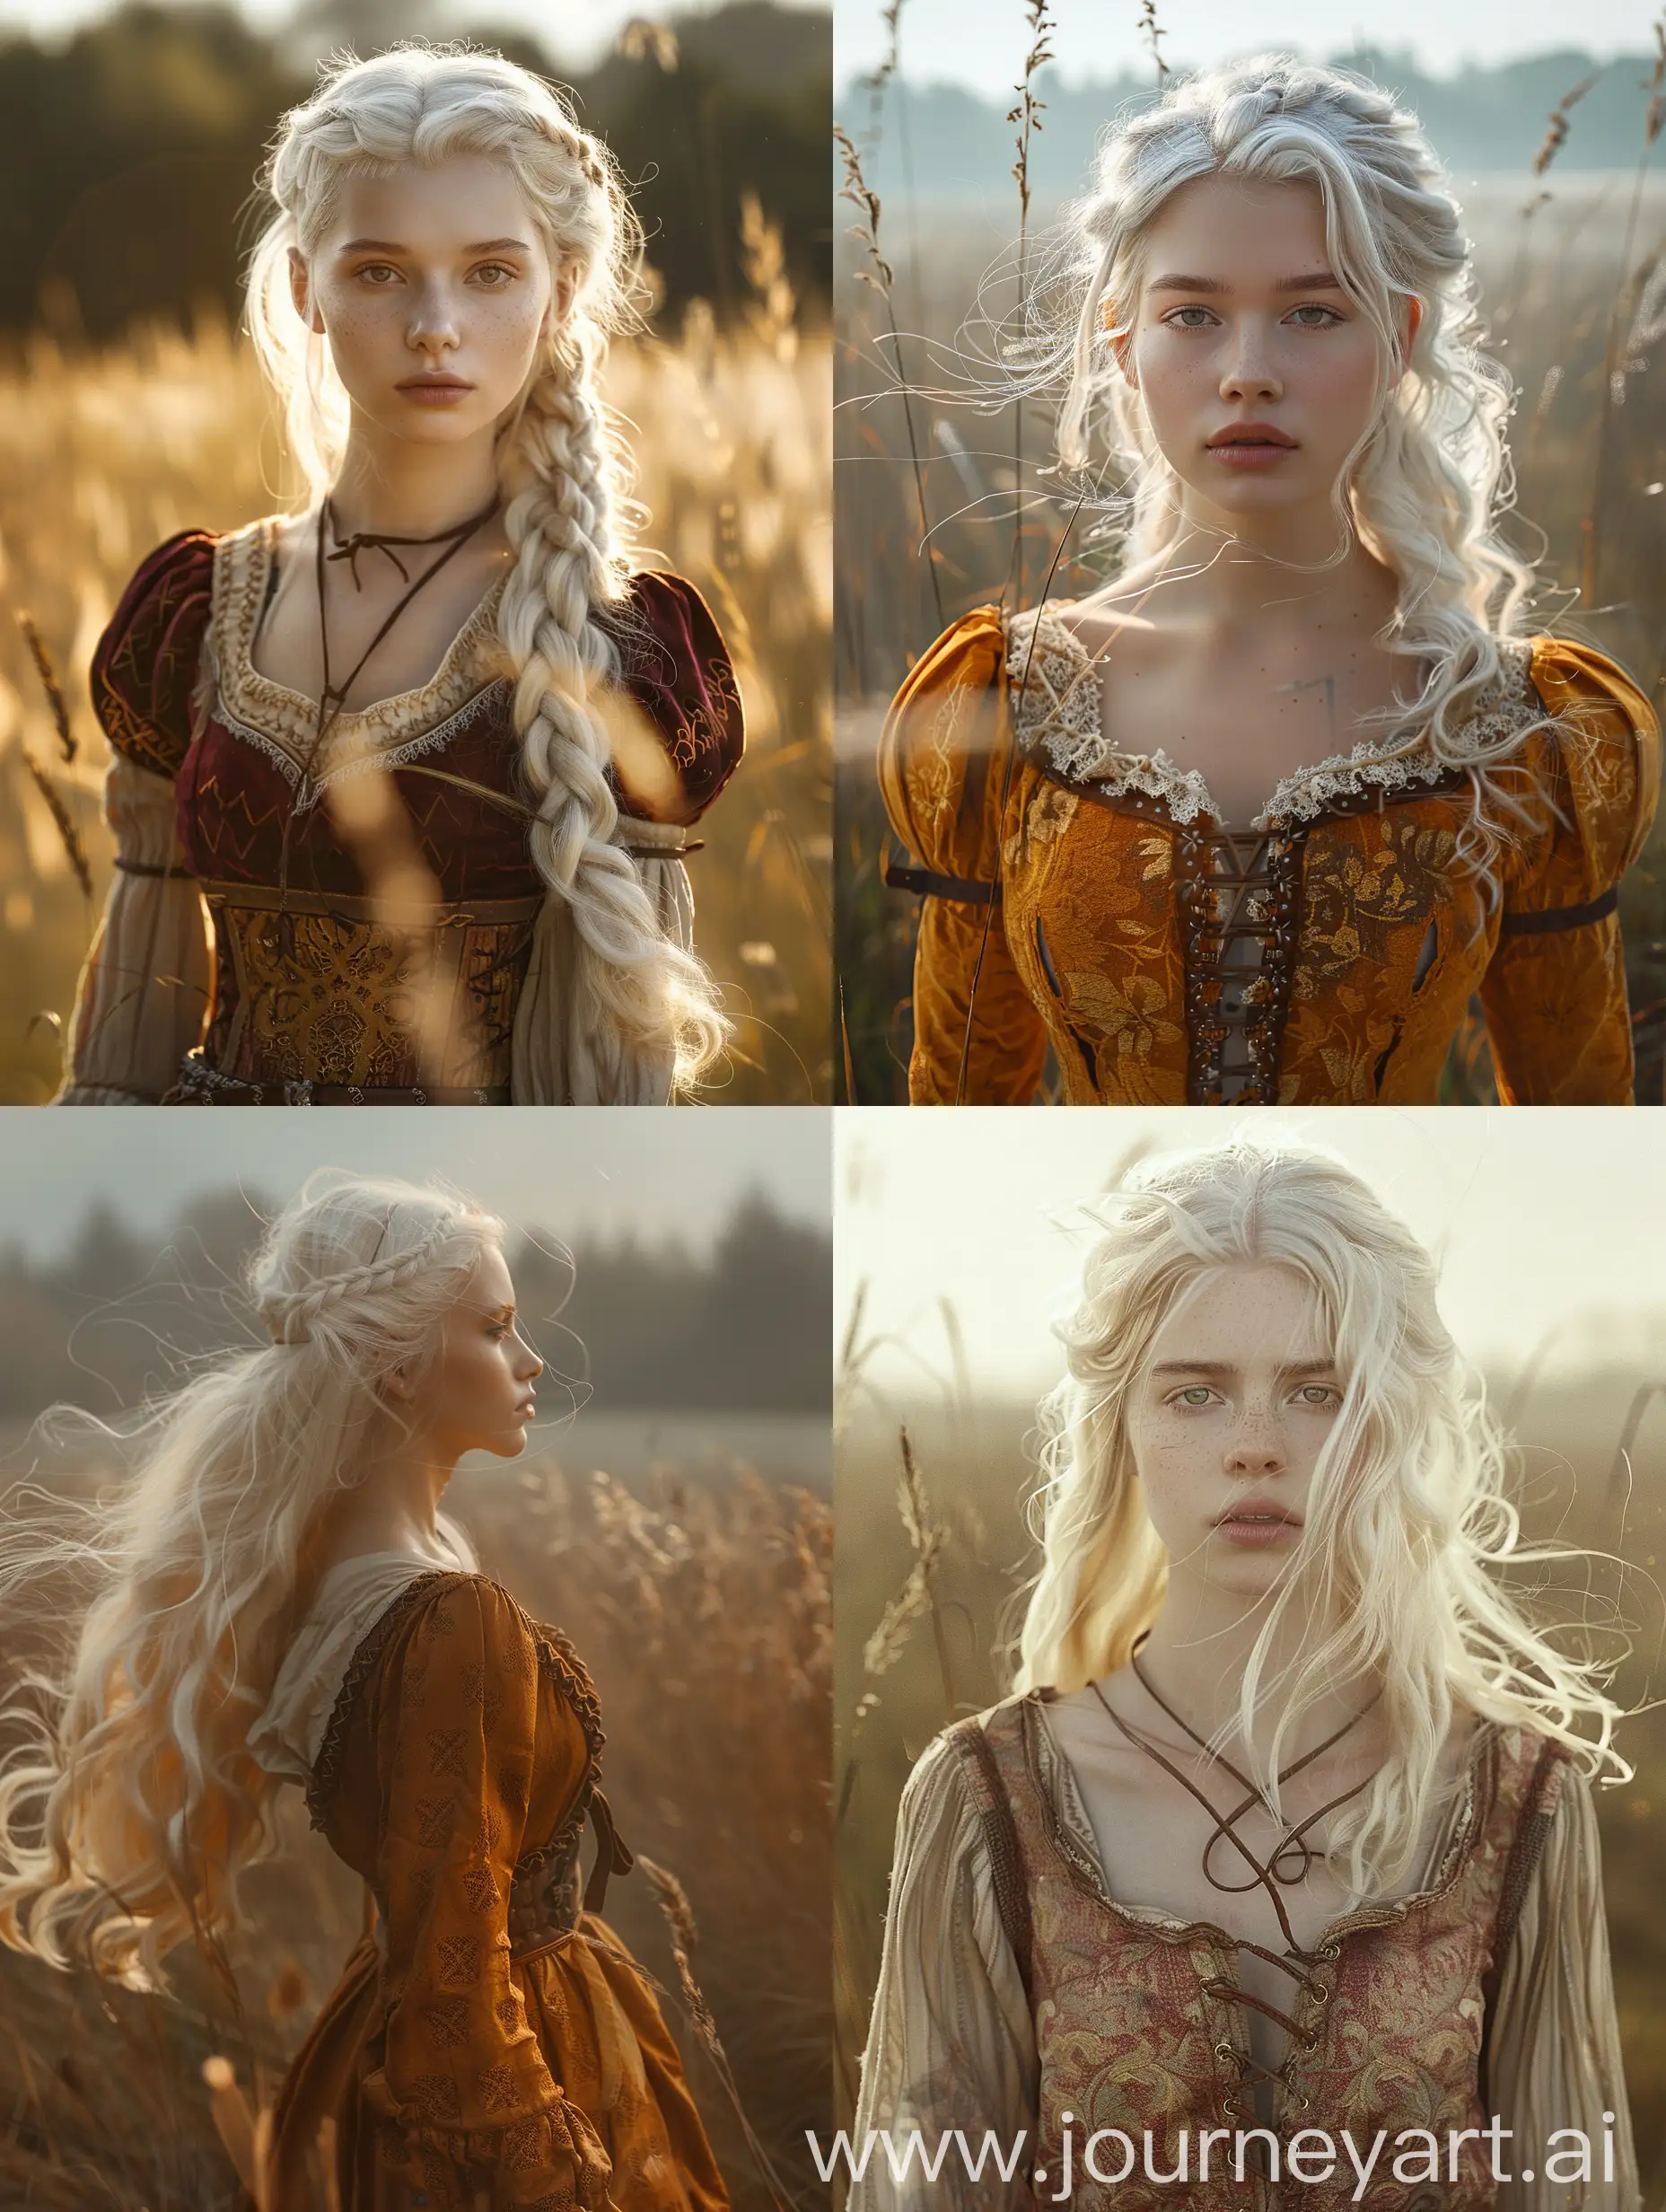 Enchanting-Blonde-Maiden-in-Detailed-Medieval-Attire-Amidst-Rural-Splendor